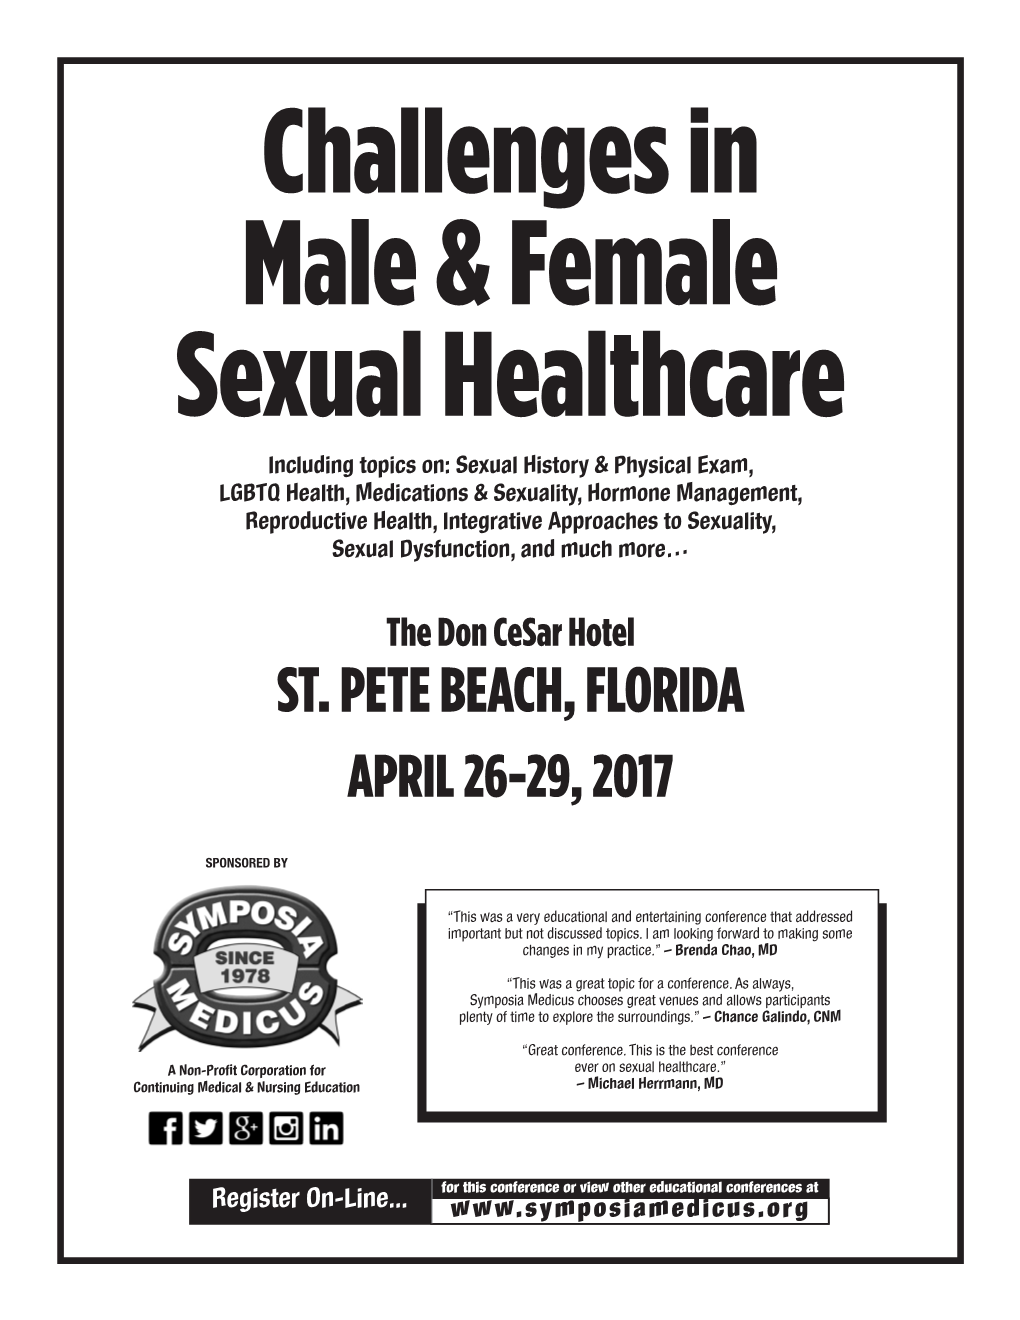 St. Pete Beach, Florida April 26-29, 2017